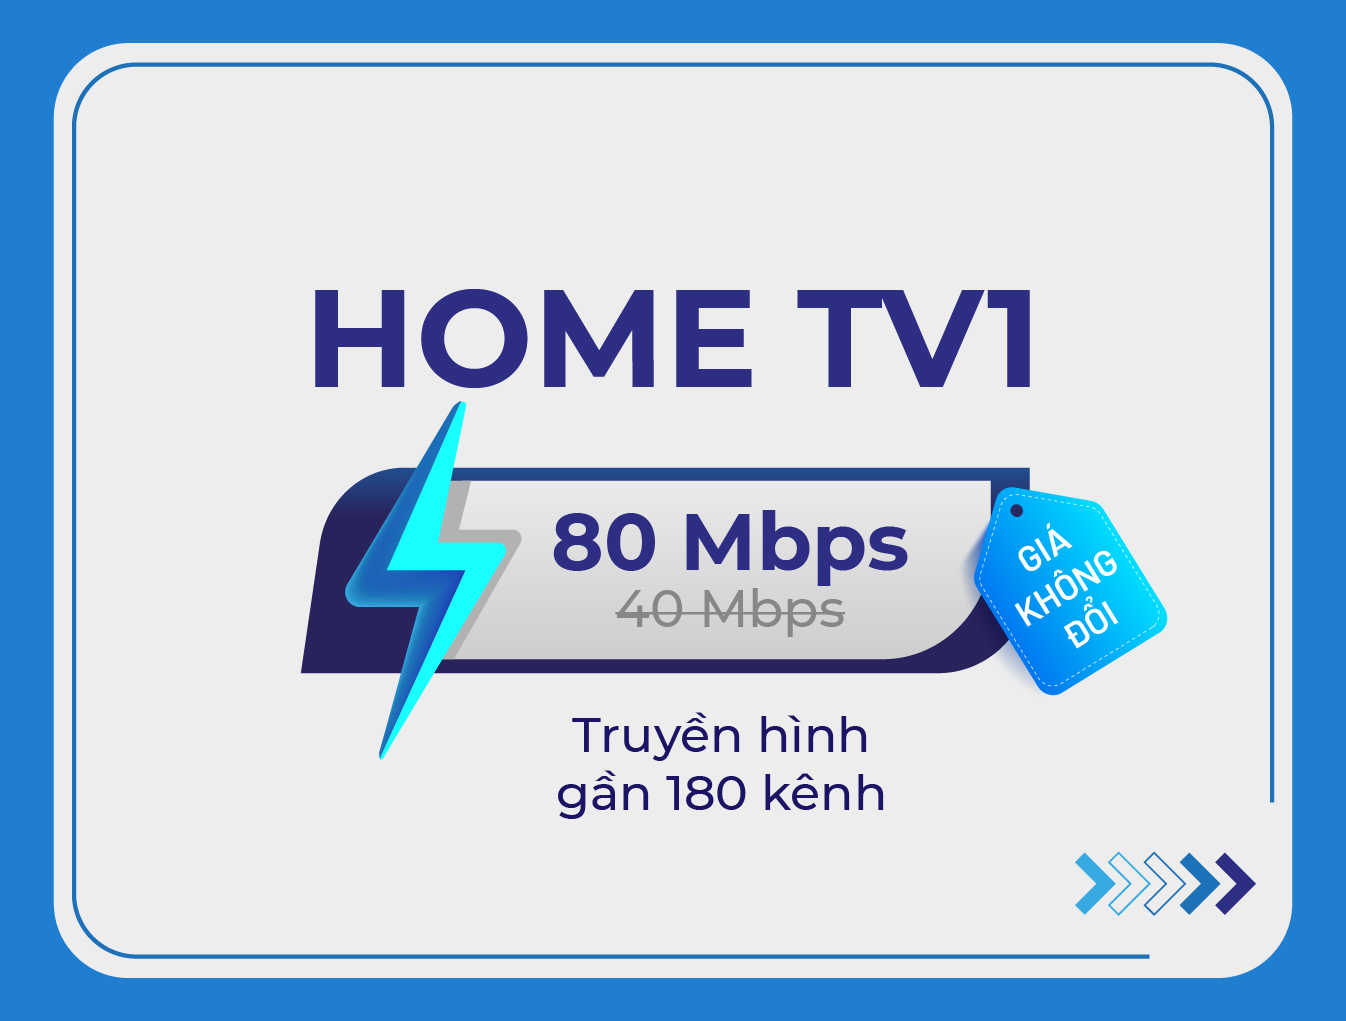 Home TV1 Smart TV